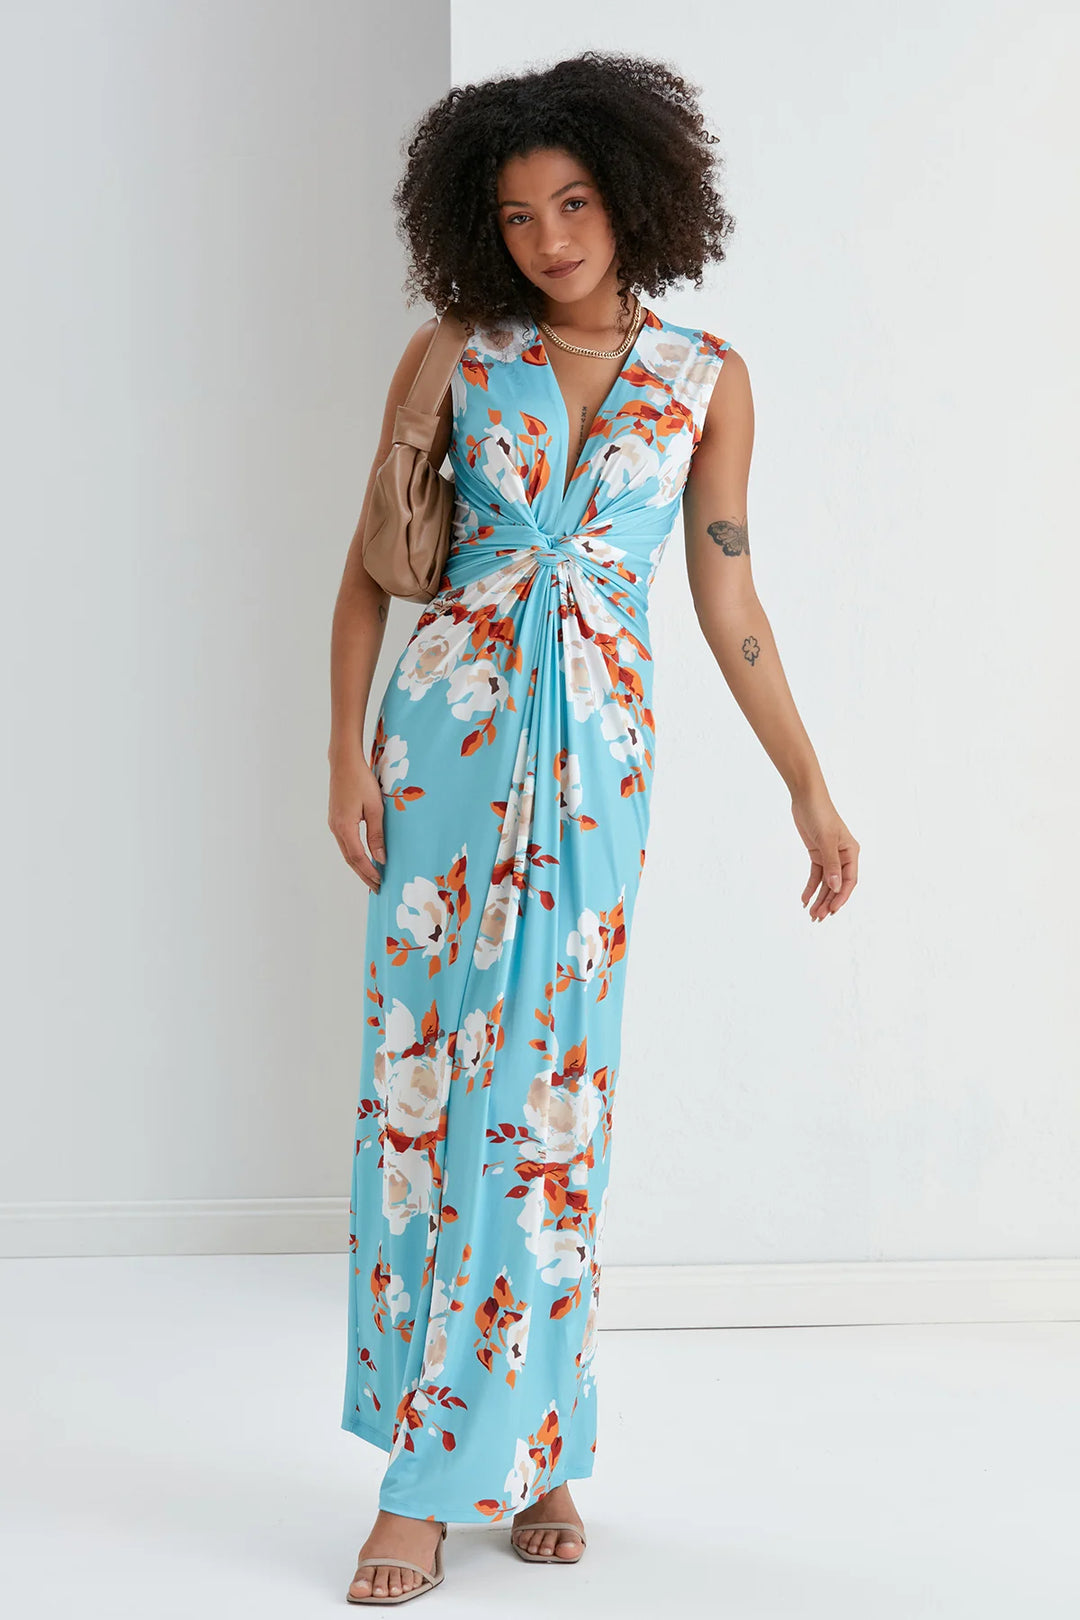 St Lucia Tall Blue Floral Sleeveless Twist Front Maxi Dress